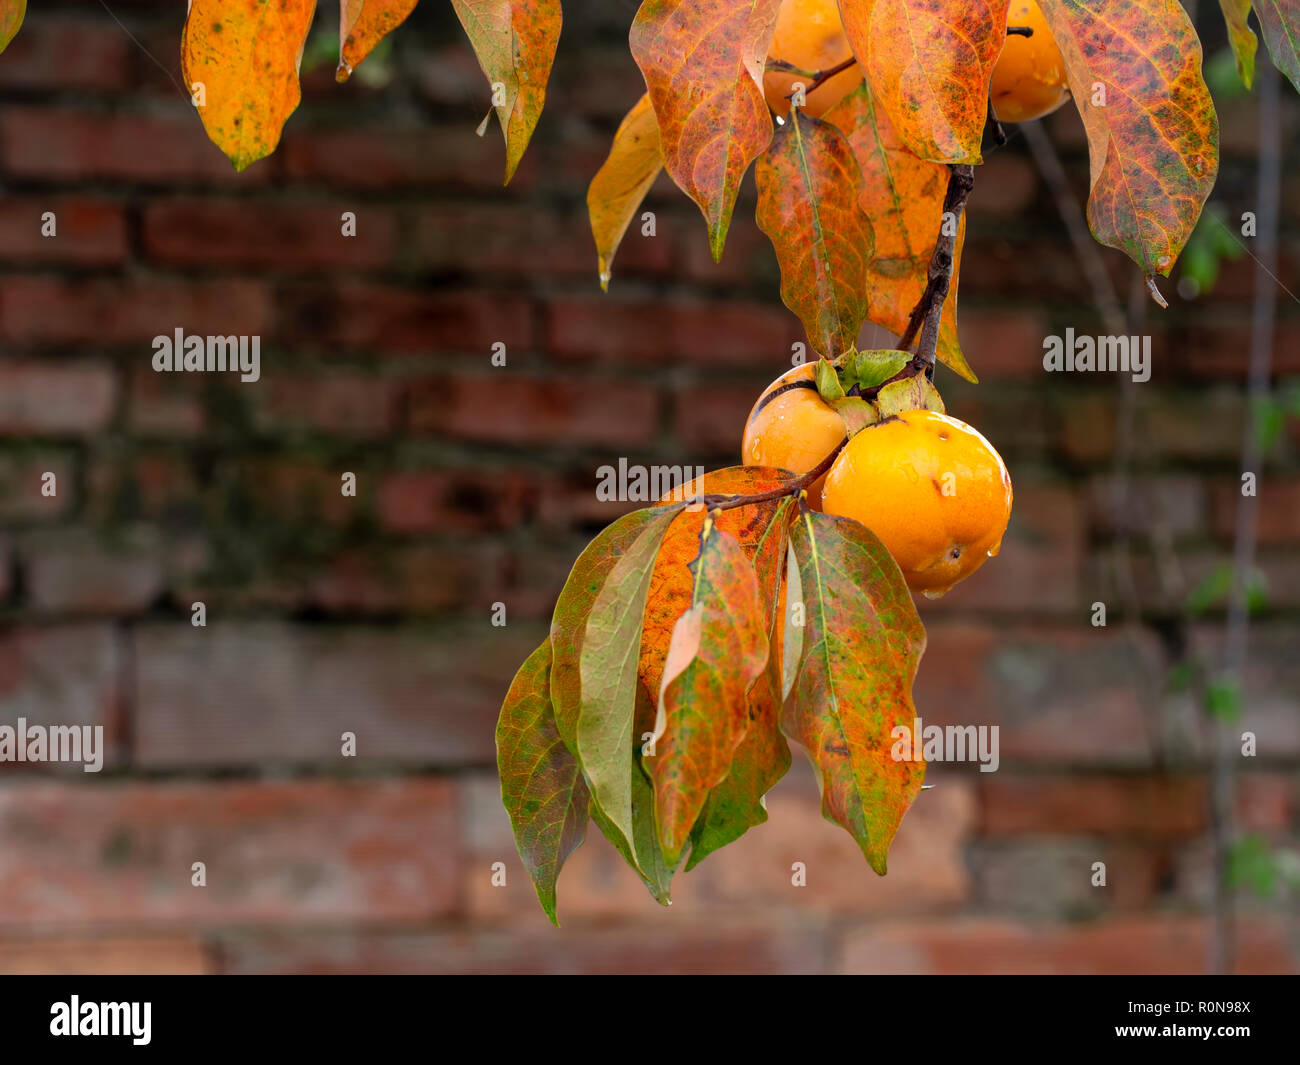 Diospyros kaki tree with ripe, bright orange fruits in autumn - Persimmon. Stock Photo